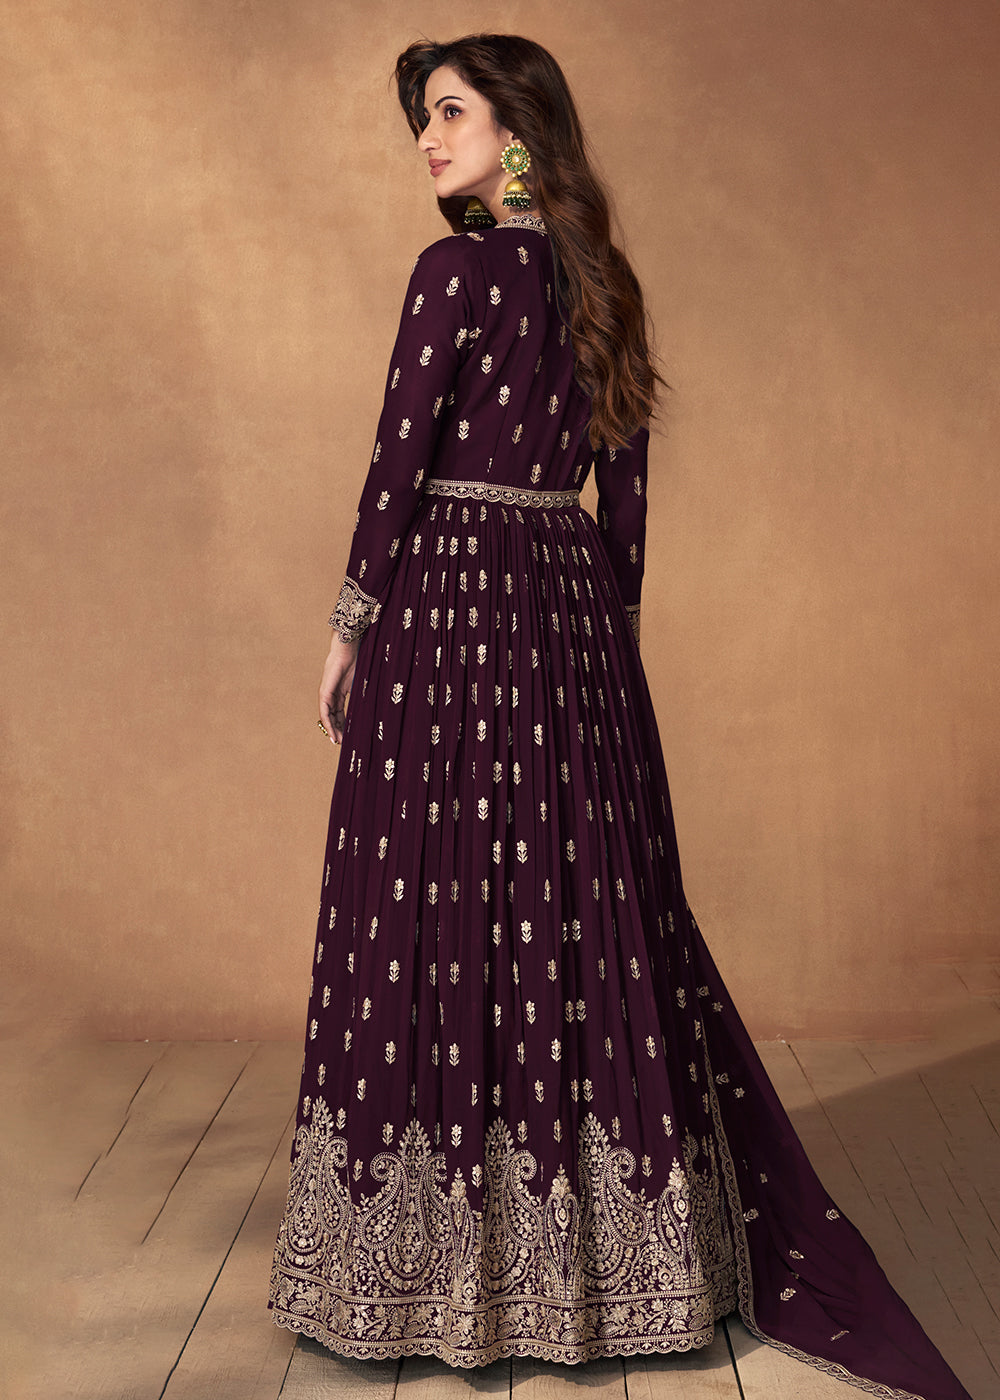 Buy Now Lehenga Style Plum Purple Wedding Wear Anarkali Suit Online in USA, UK, Australia, New Zealand, Canada & Worldwide at Empress Clothing.